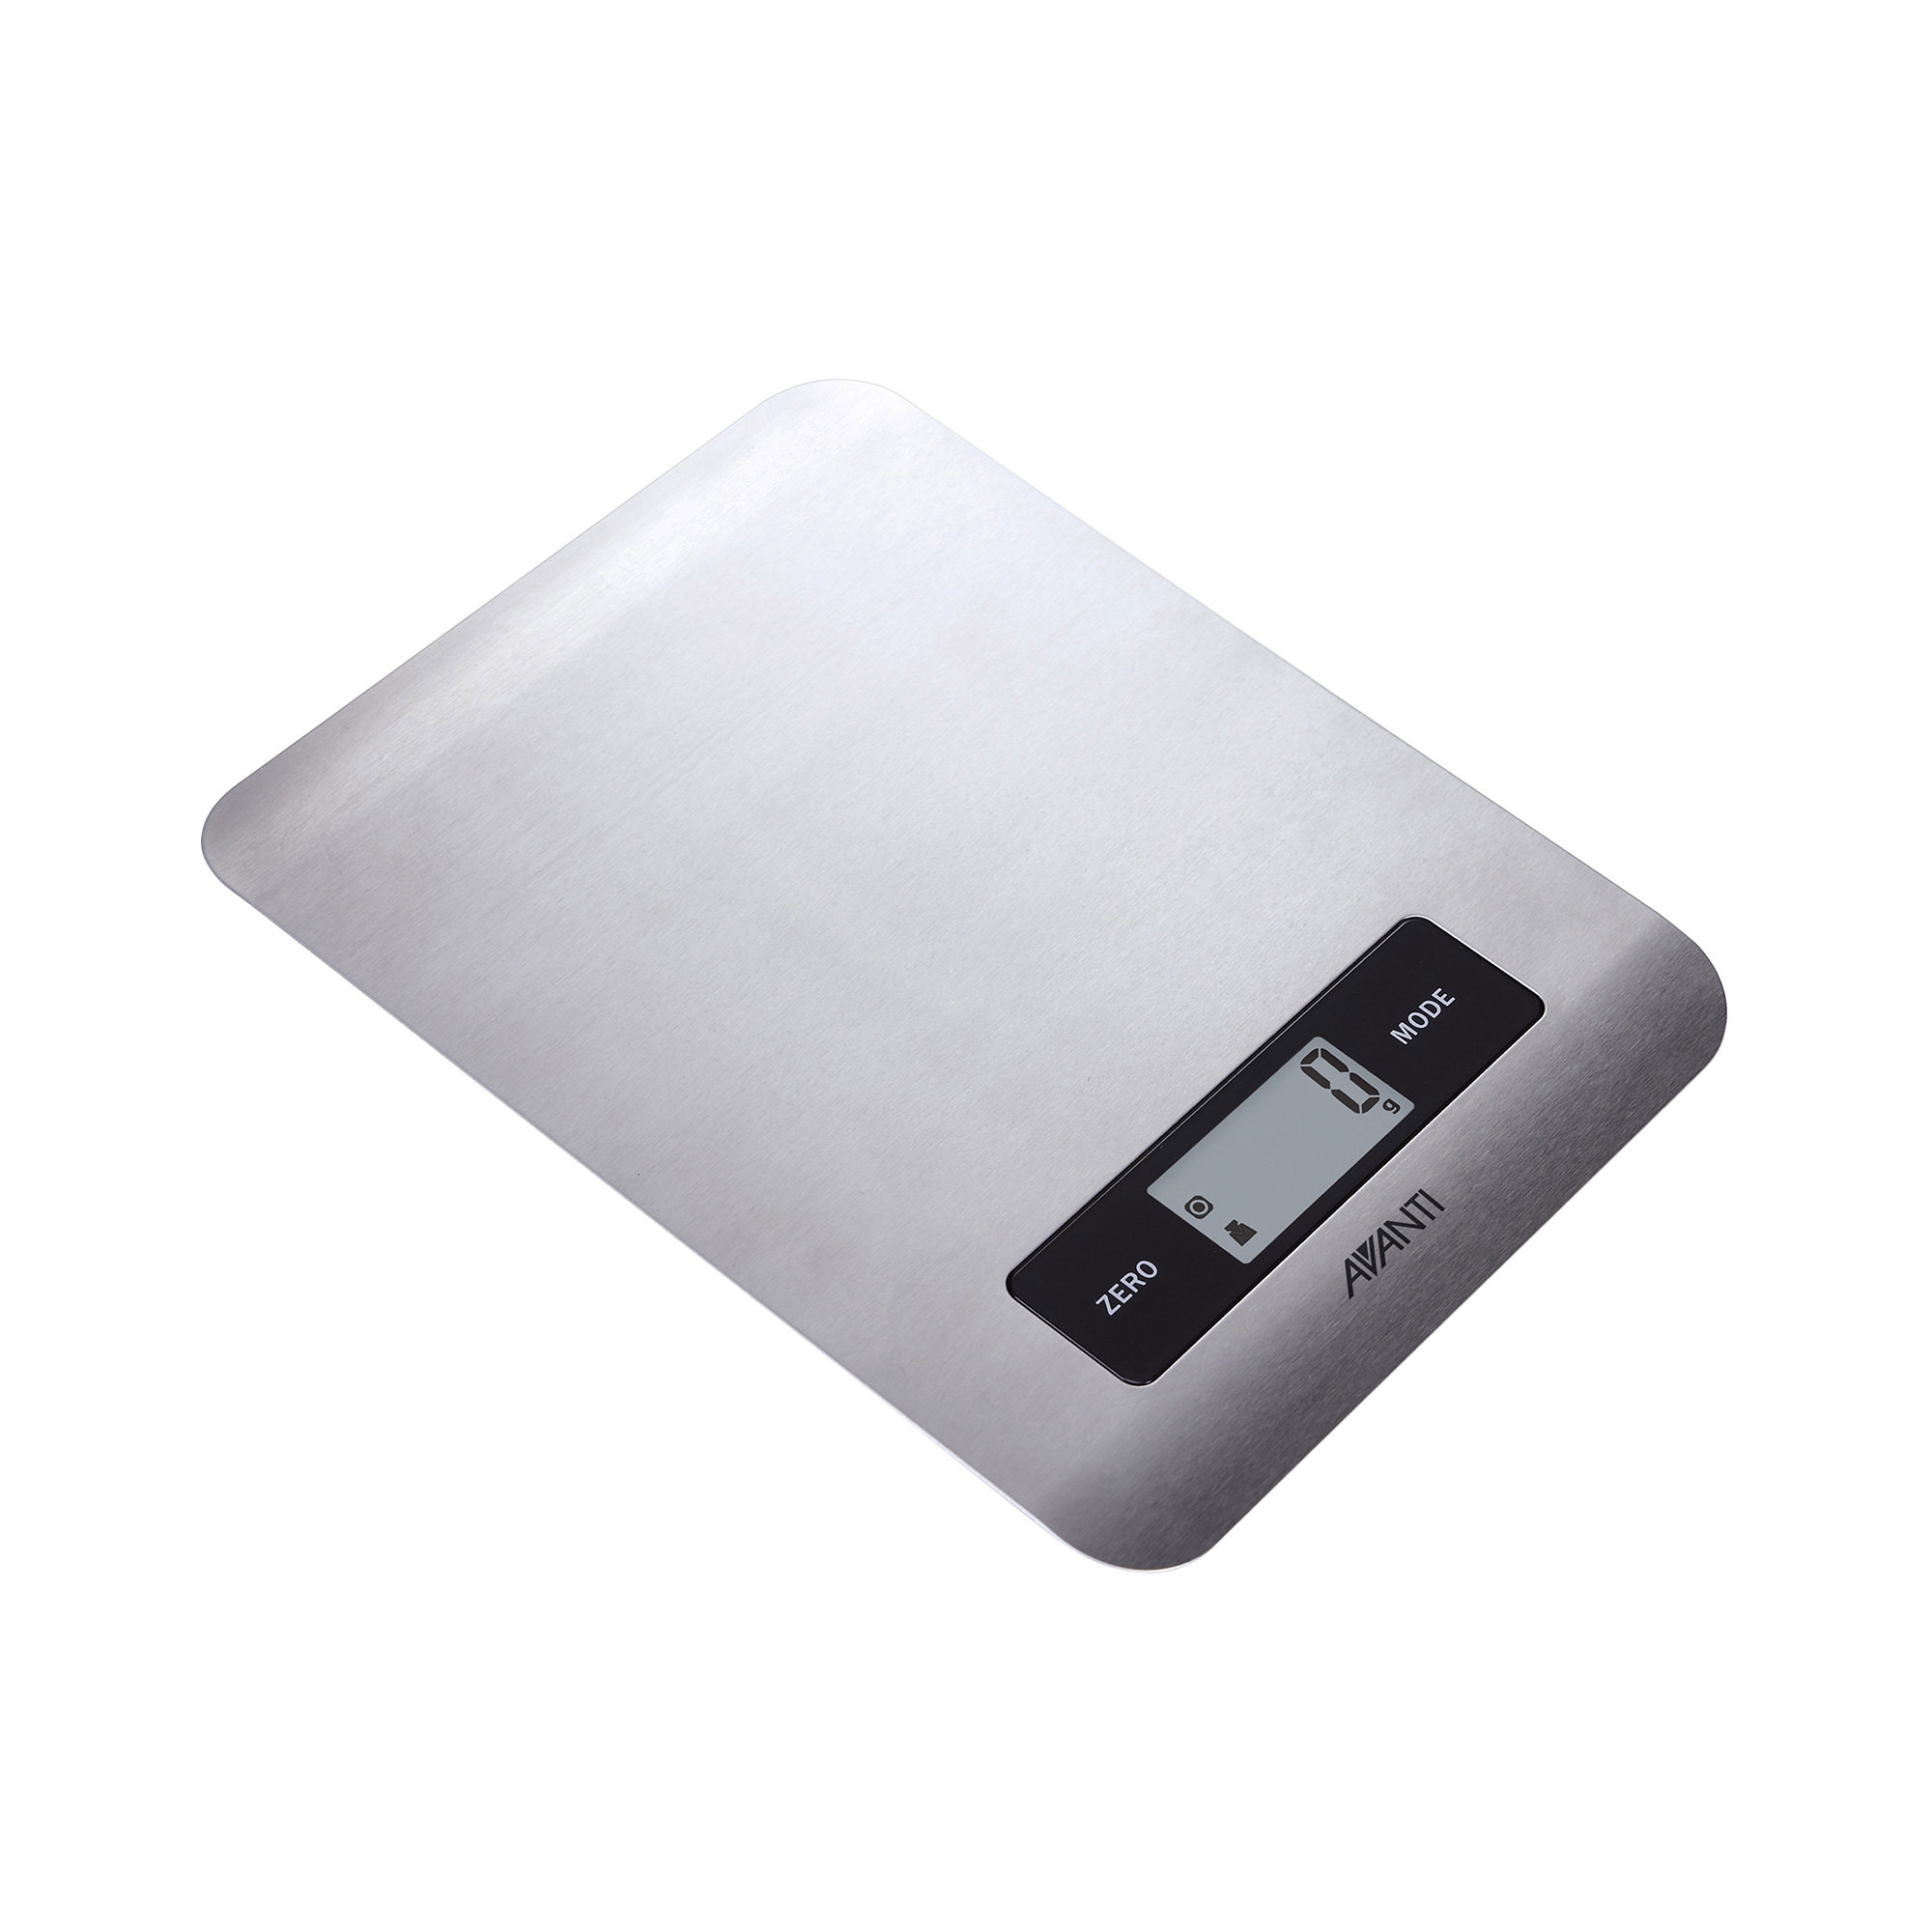 Avanti Digital Kitchen Scale Ultra Slim 5kg Stainless Steel Image 1